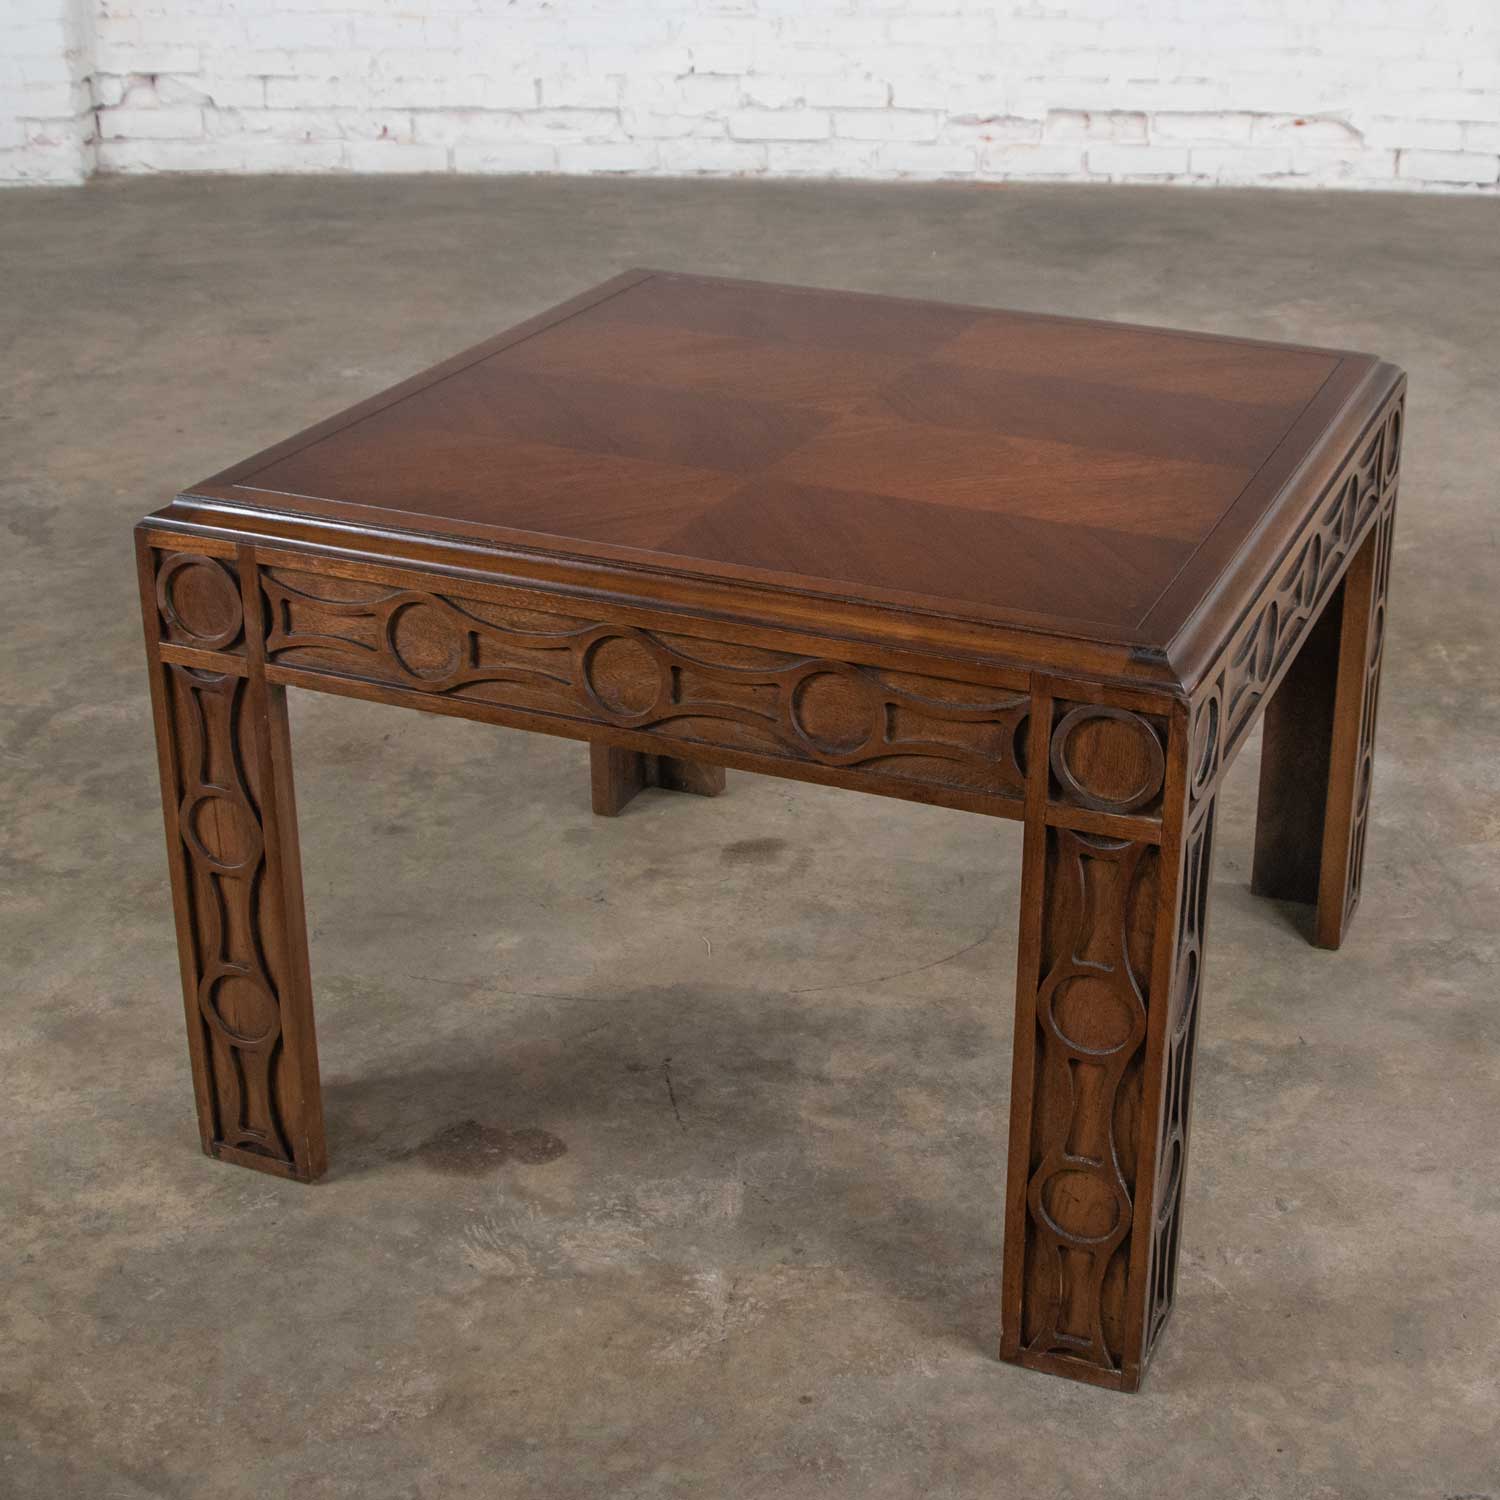 Vintage Modern Square Lane End or Side Table with Carved Leg Design & Chevron Veneer Top